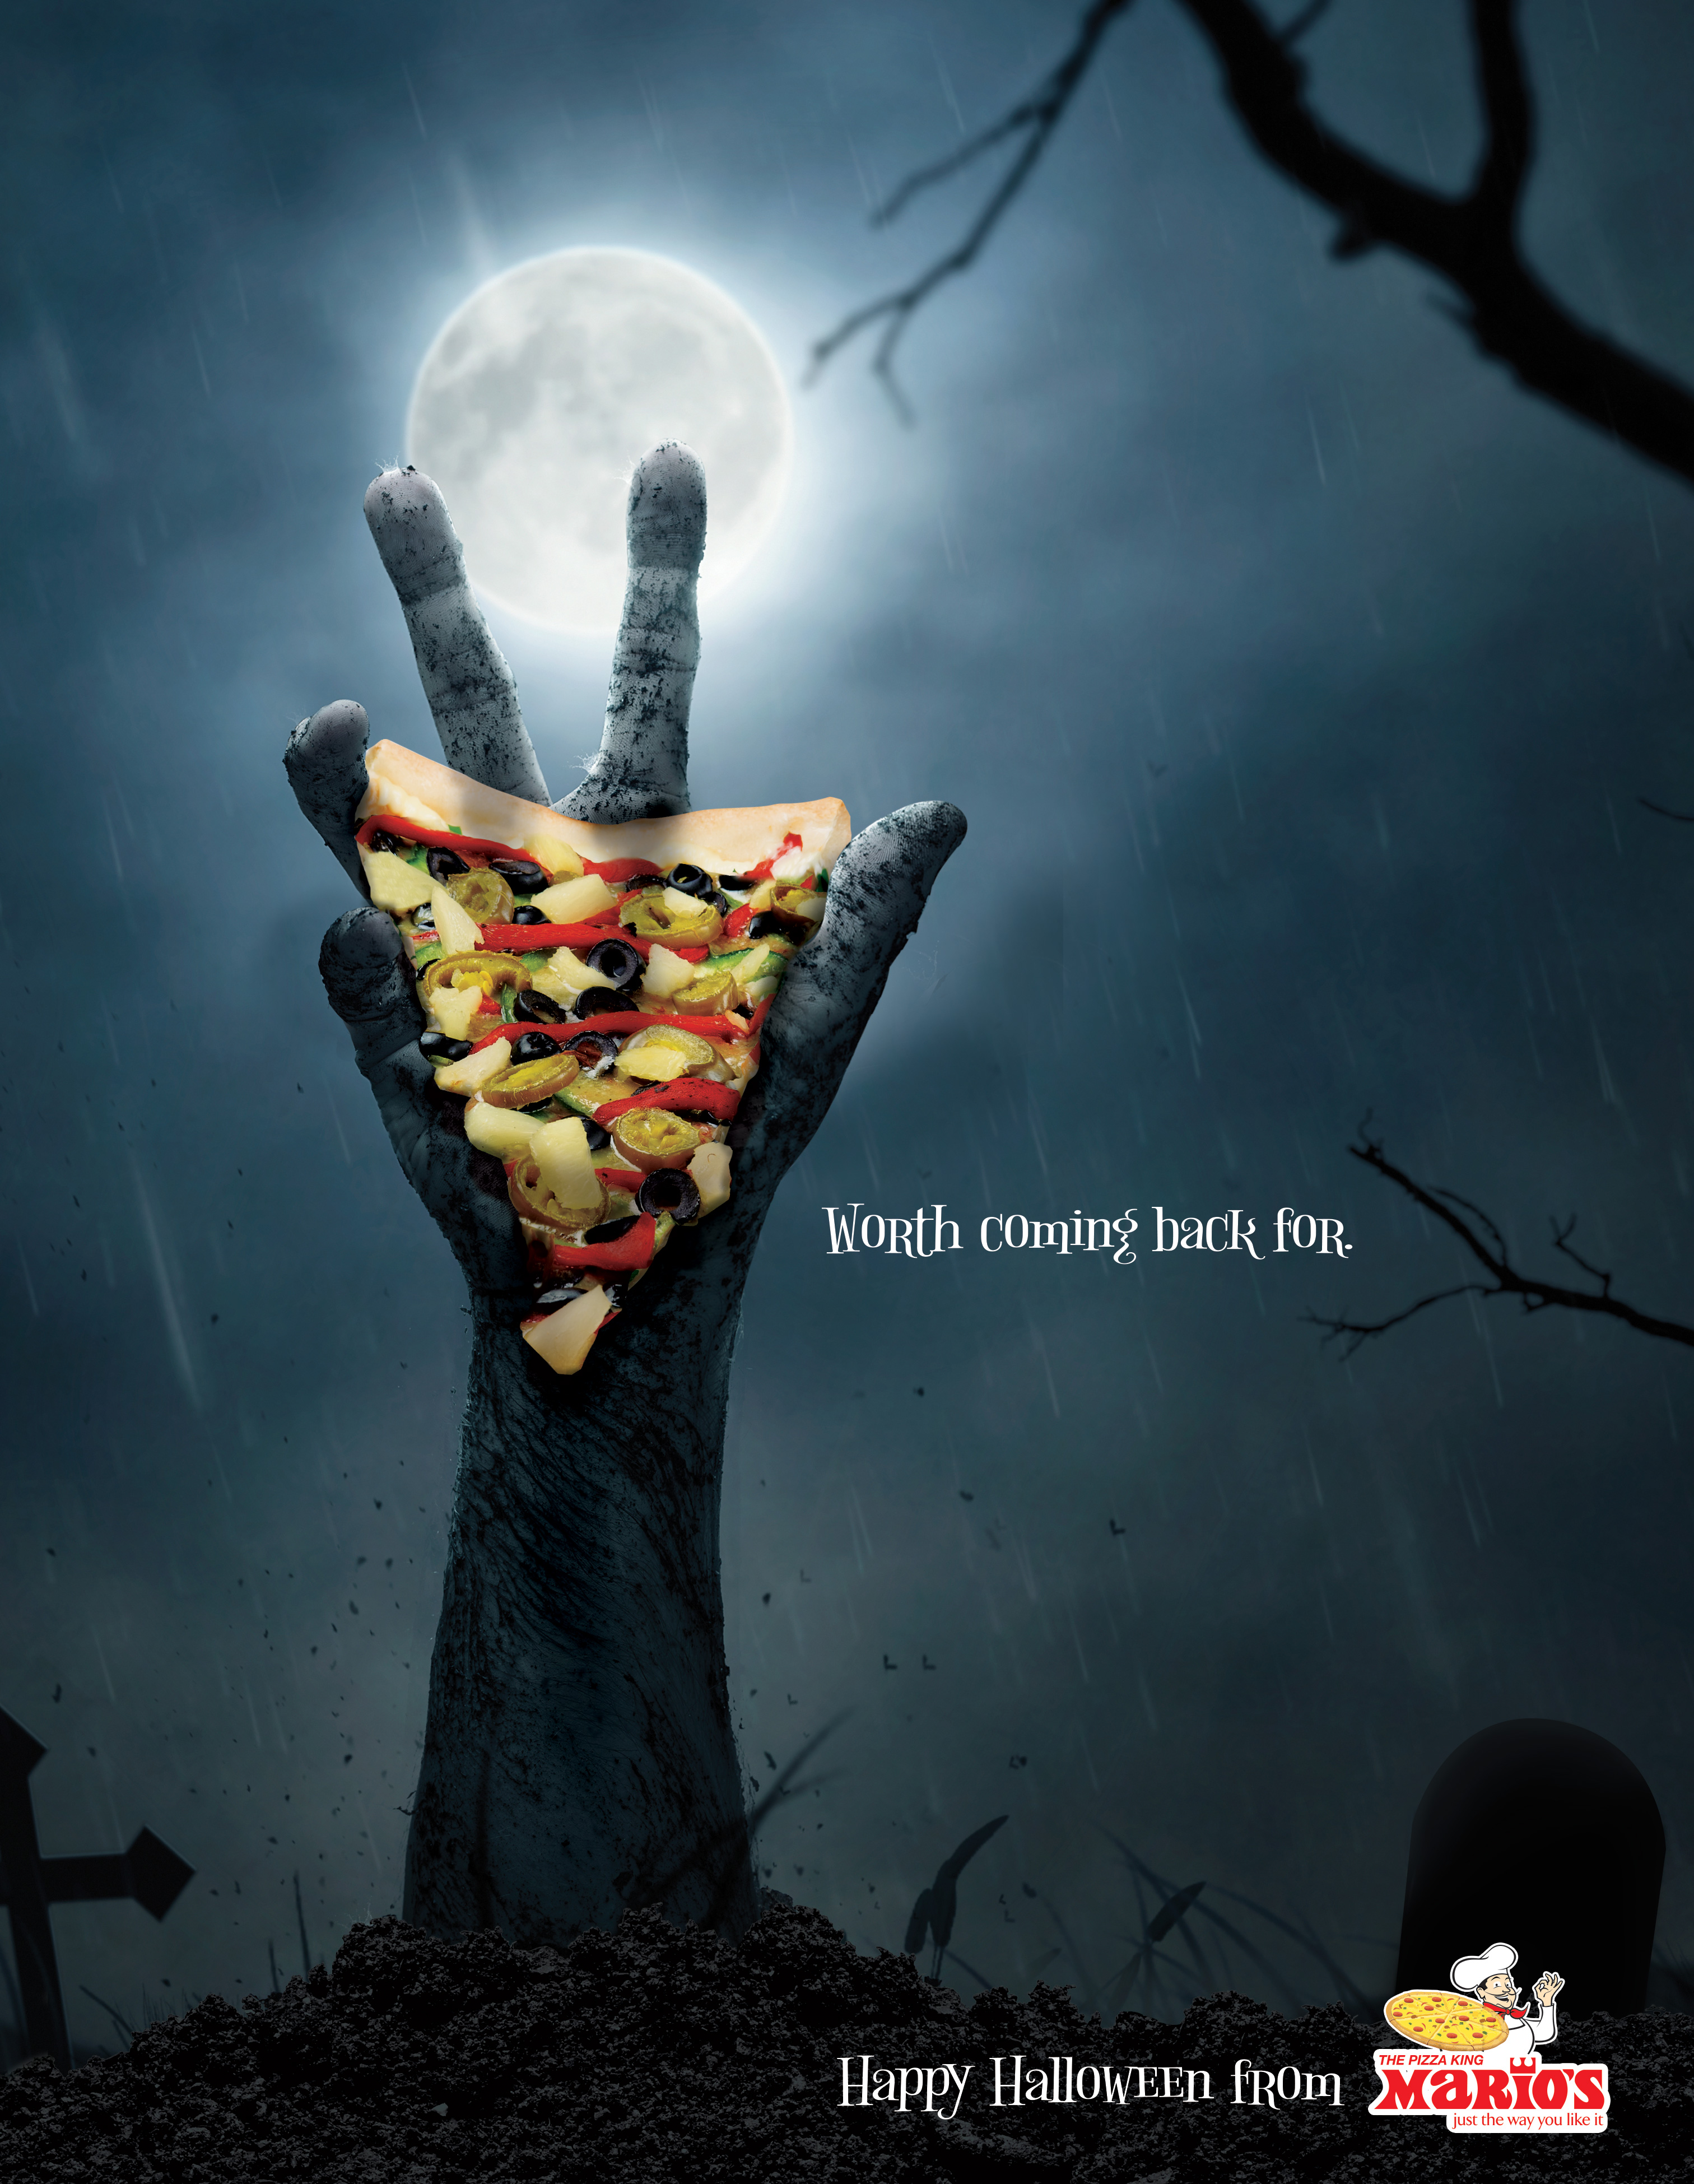 Mario's Halloween FB ad - Pepper Advertising